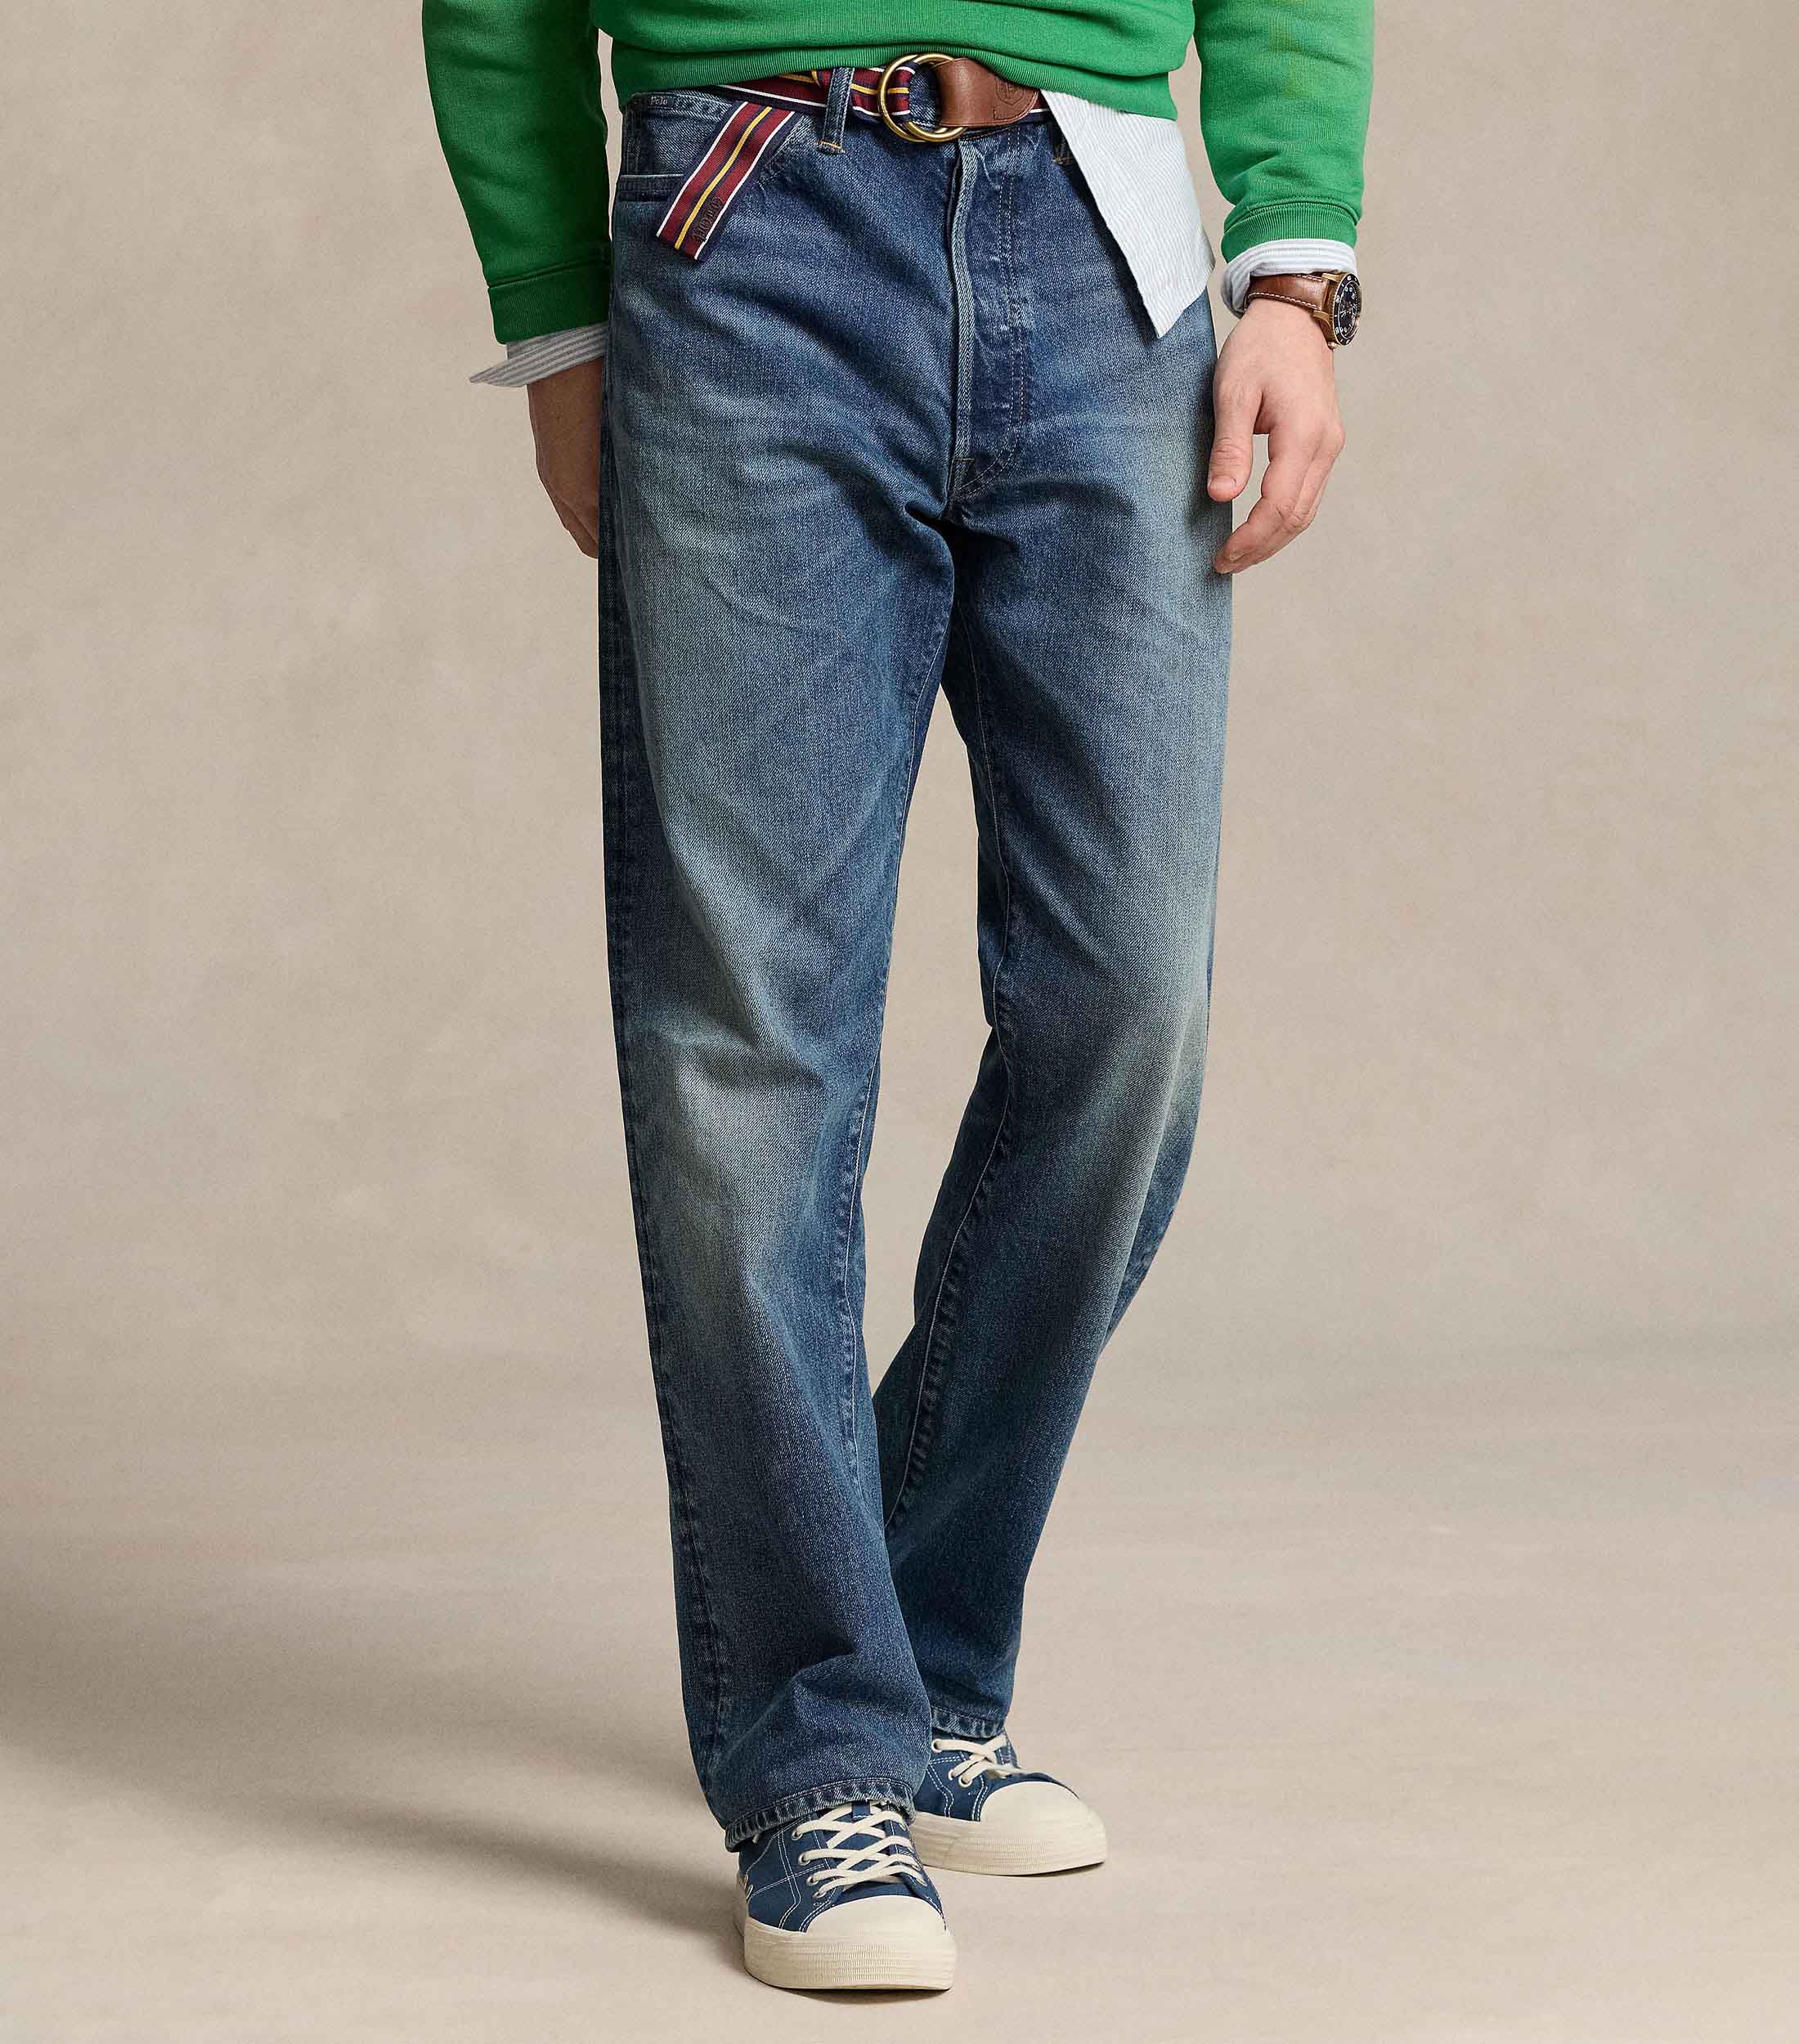 Moda Marca Jeans color contraste línea de coches Diseño algodón